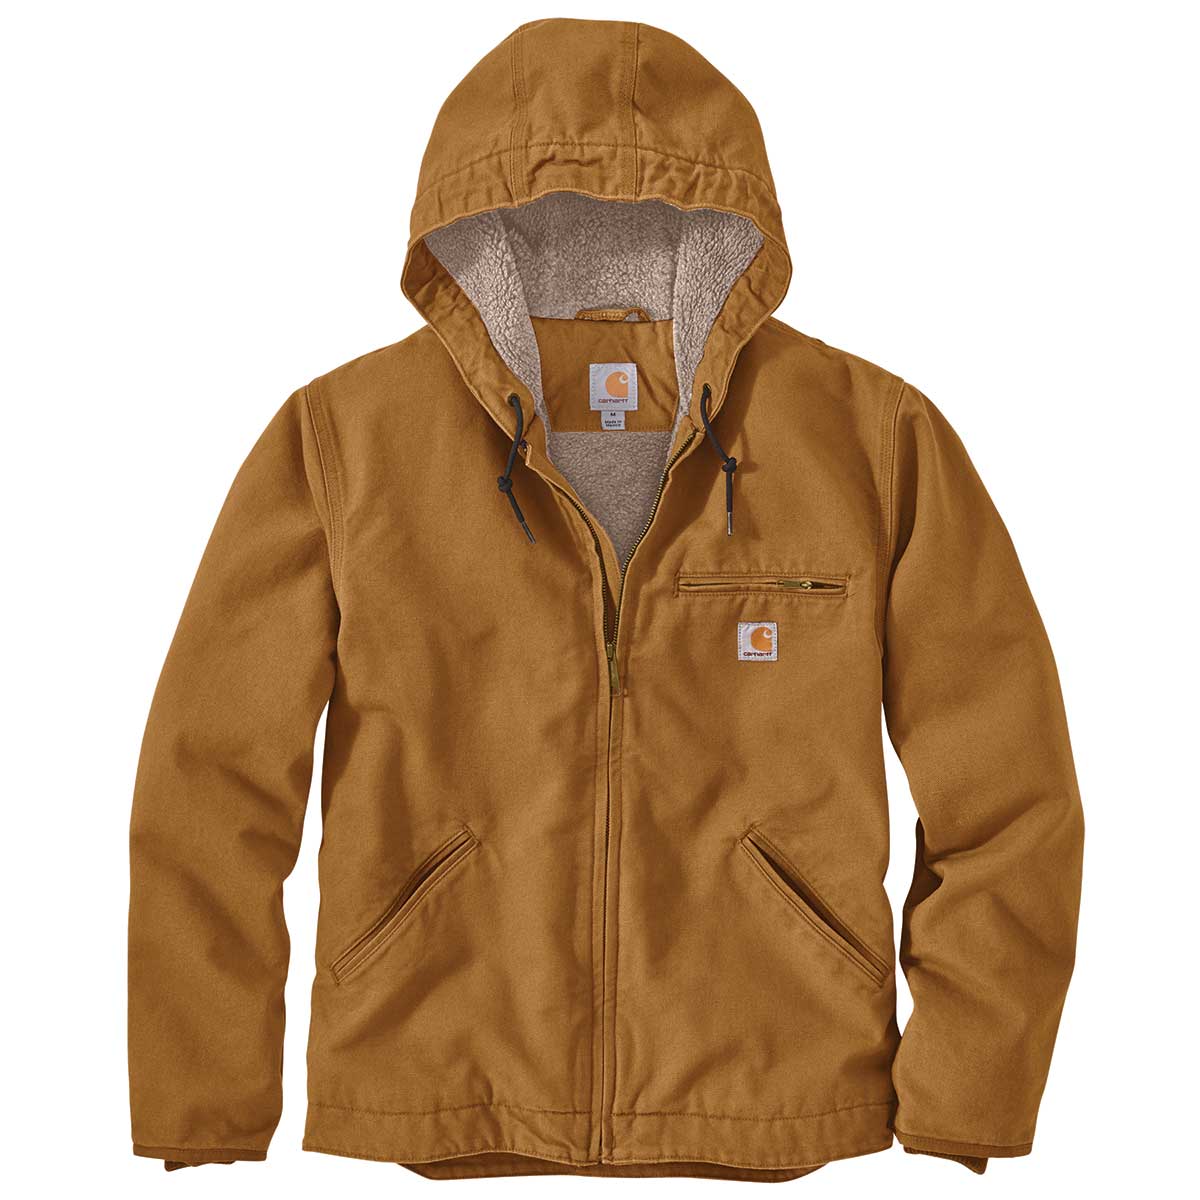 Carhartt Men's Washed Duck Sherpa Lined Hooded Work Jacket